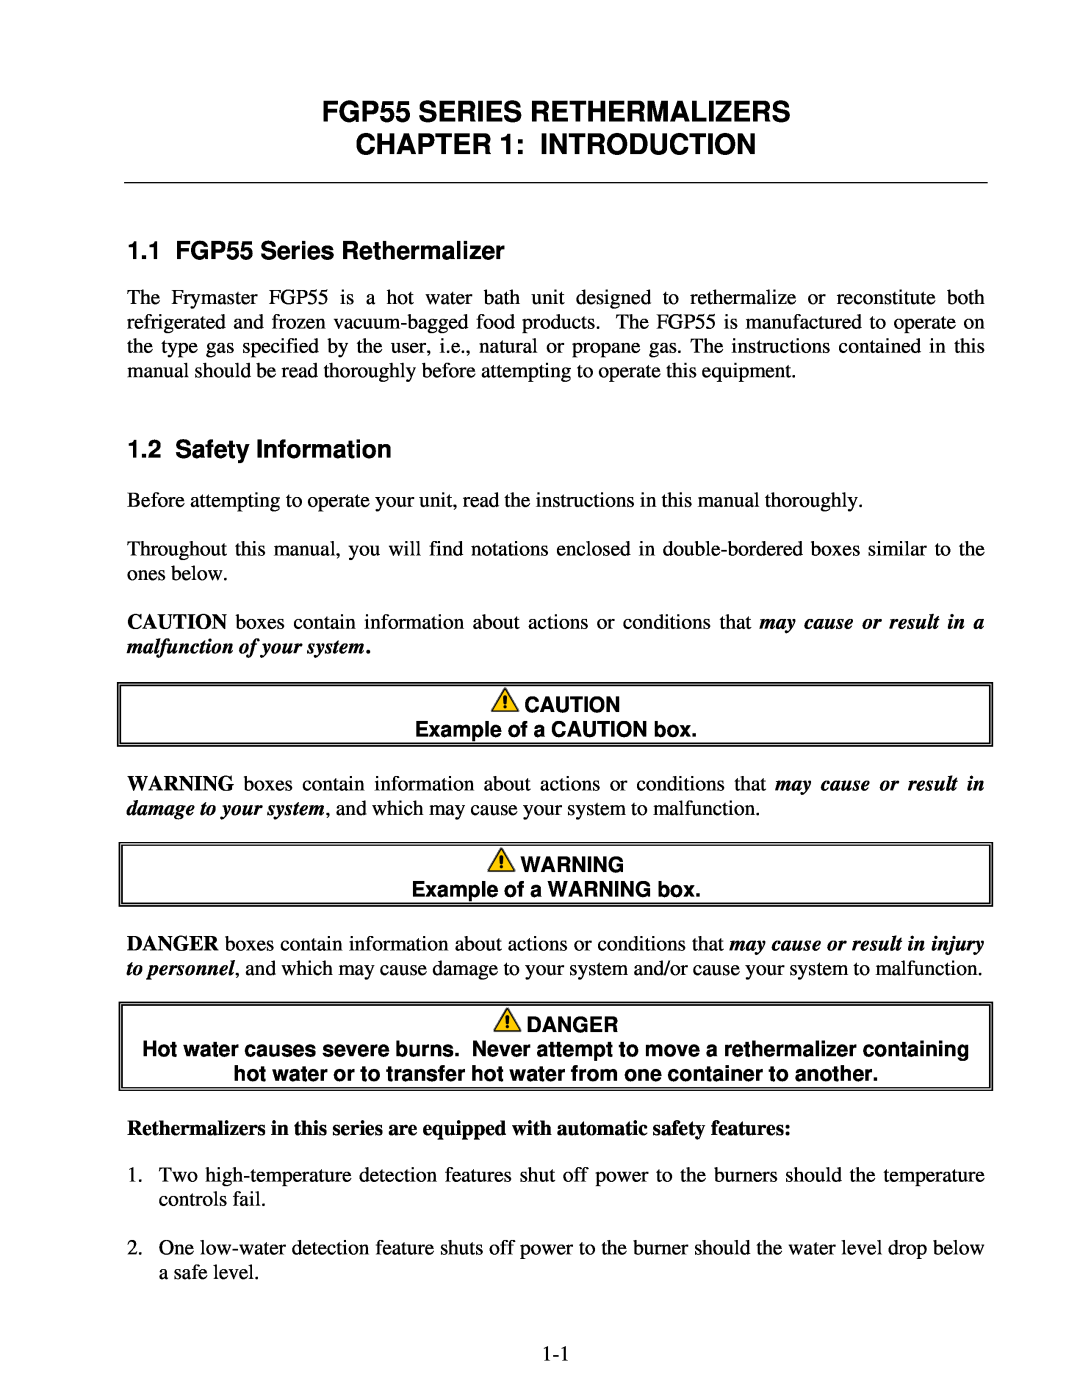 Frymaster FGP55 SERIES RETHERMALIZERS, Introduction, 1.1 FGP55 Series Rethermalizer, Safety Information, Danger 